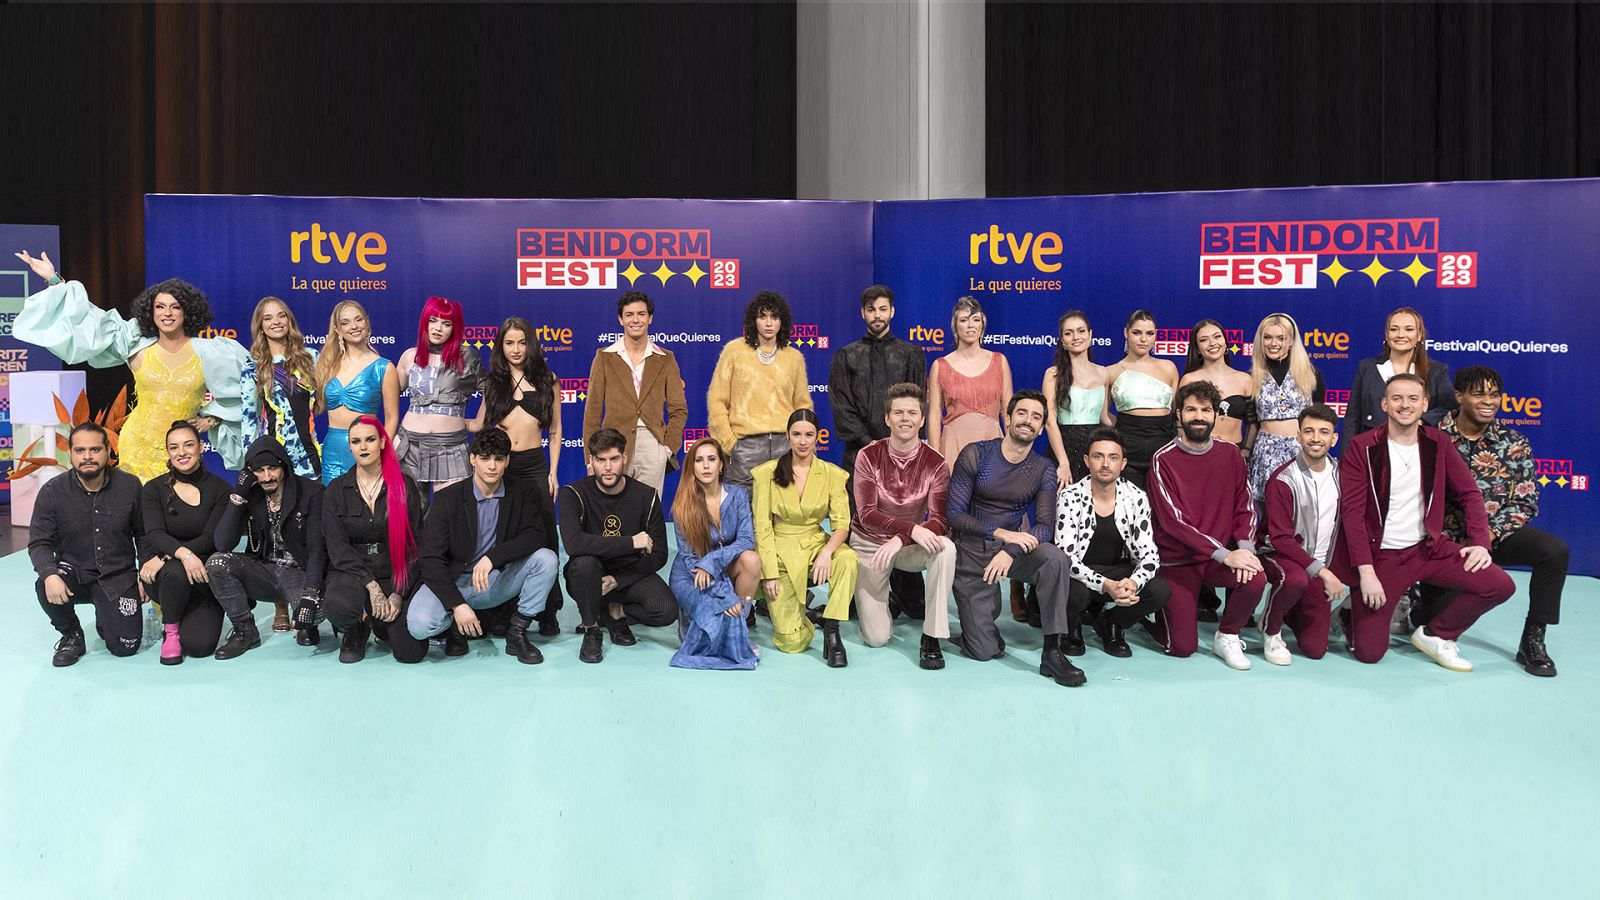 18 artistas competirán por convertirse en el próximo representante español en Eurovisión